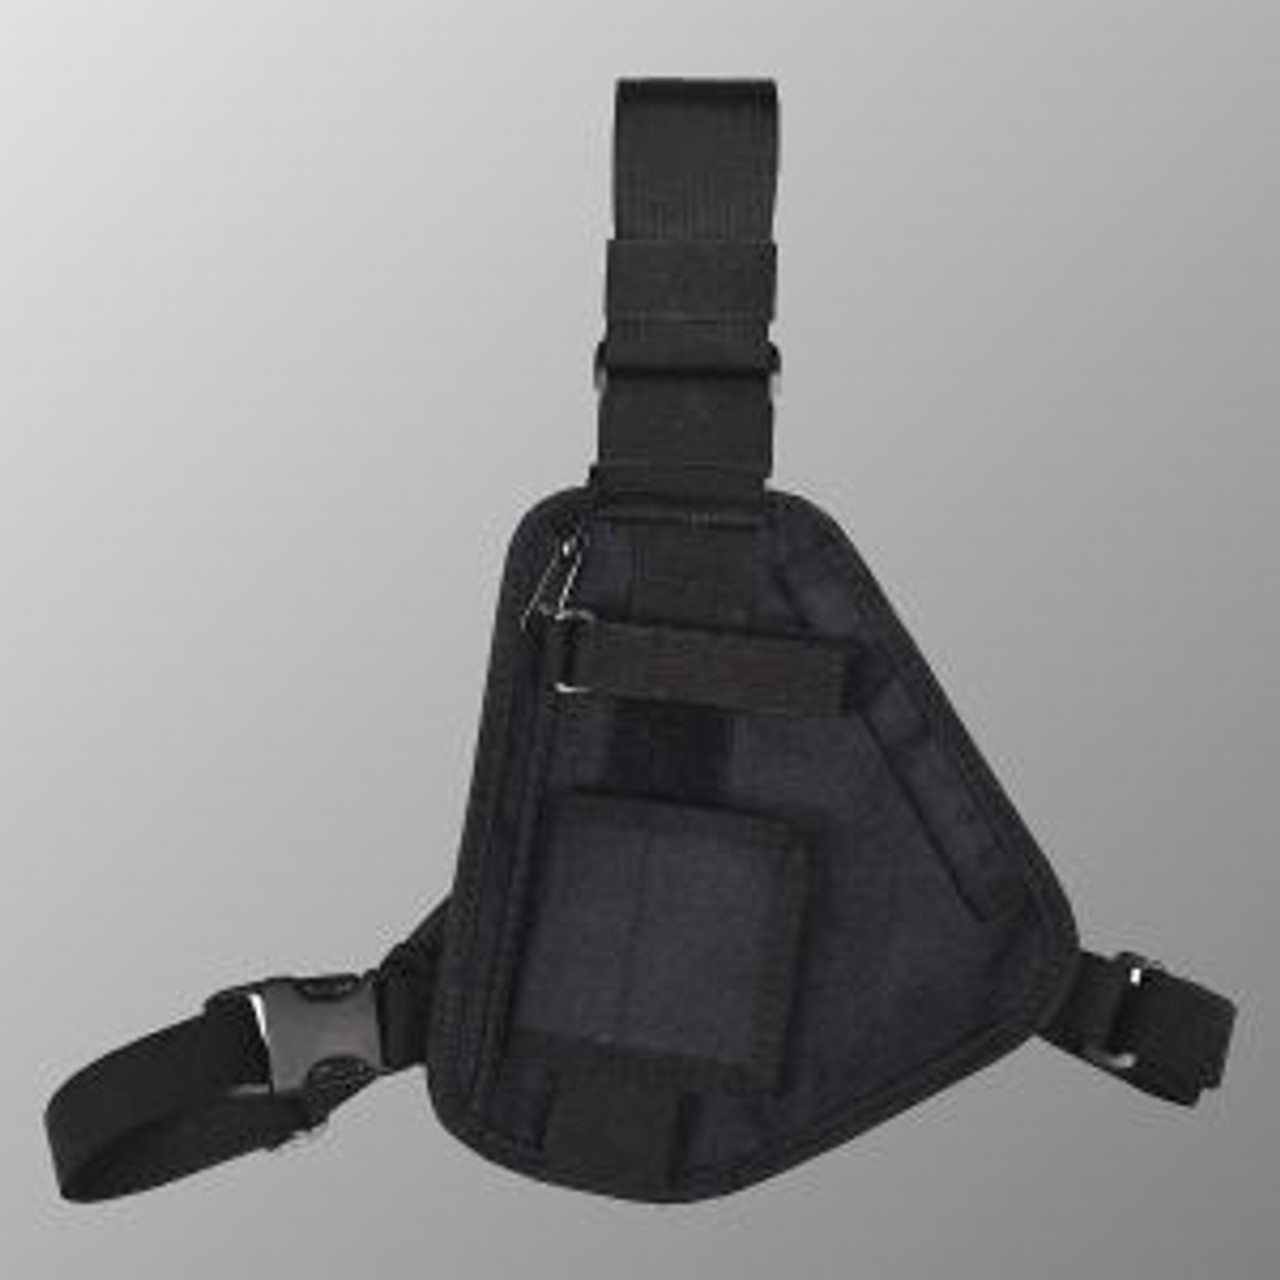 ICOM IC-F70T 3-Point Chest Harness - Black